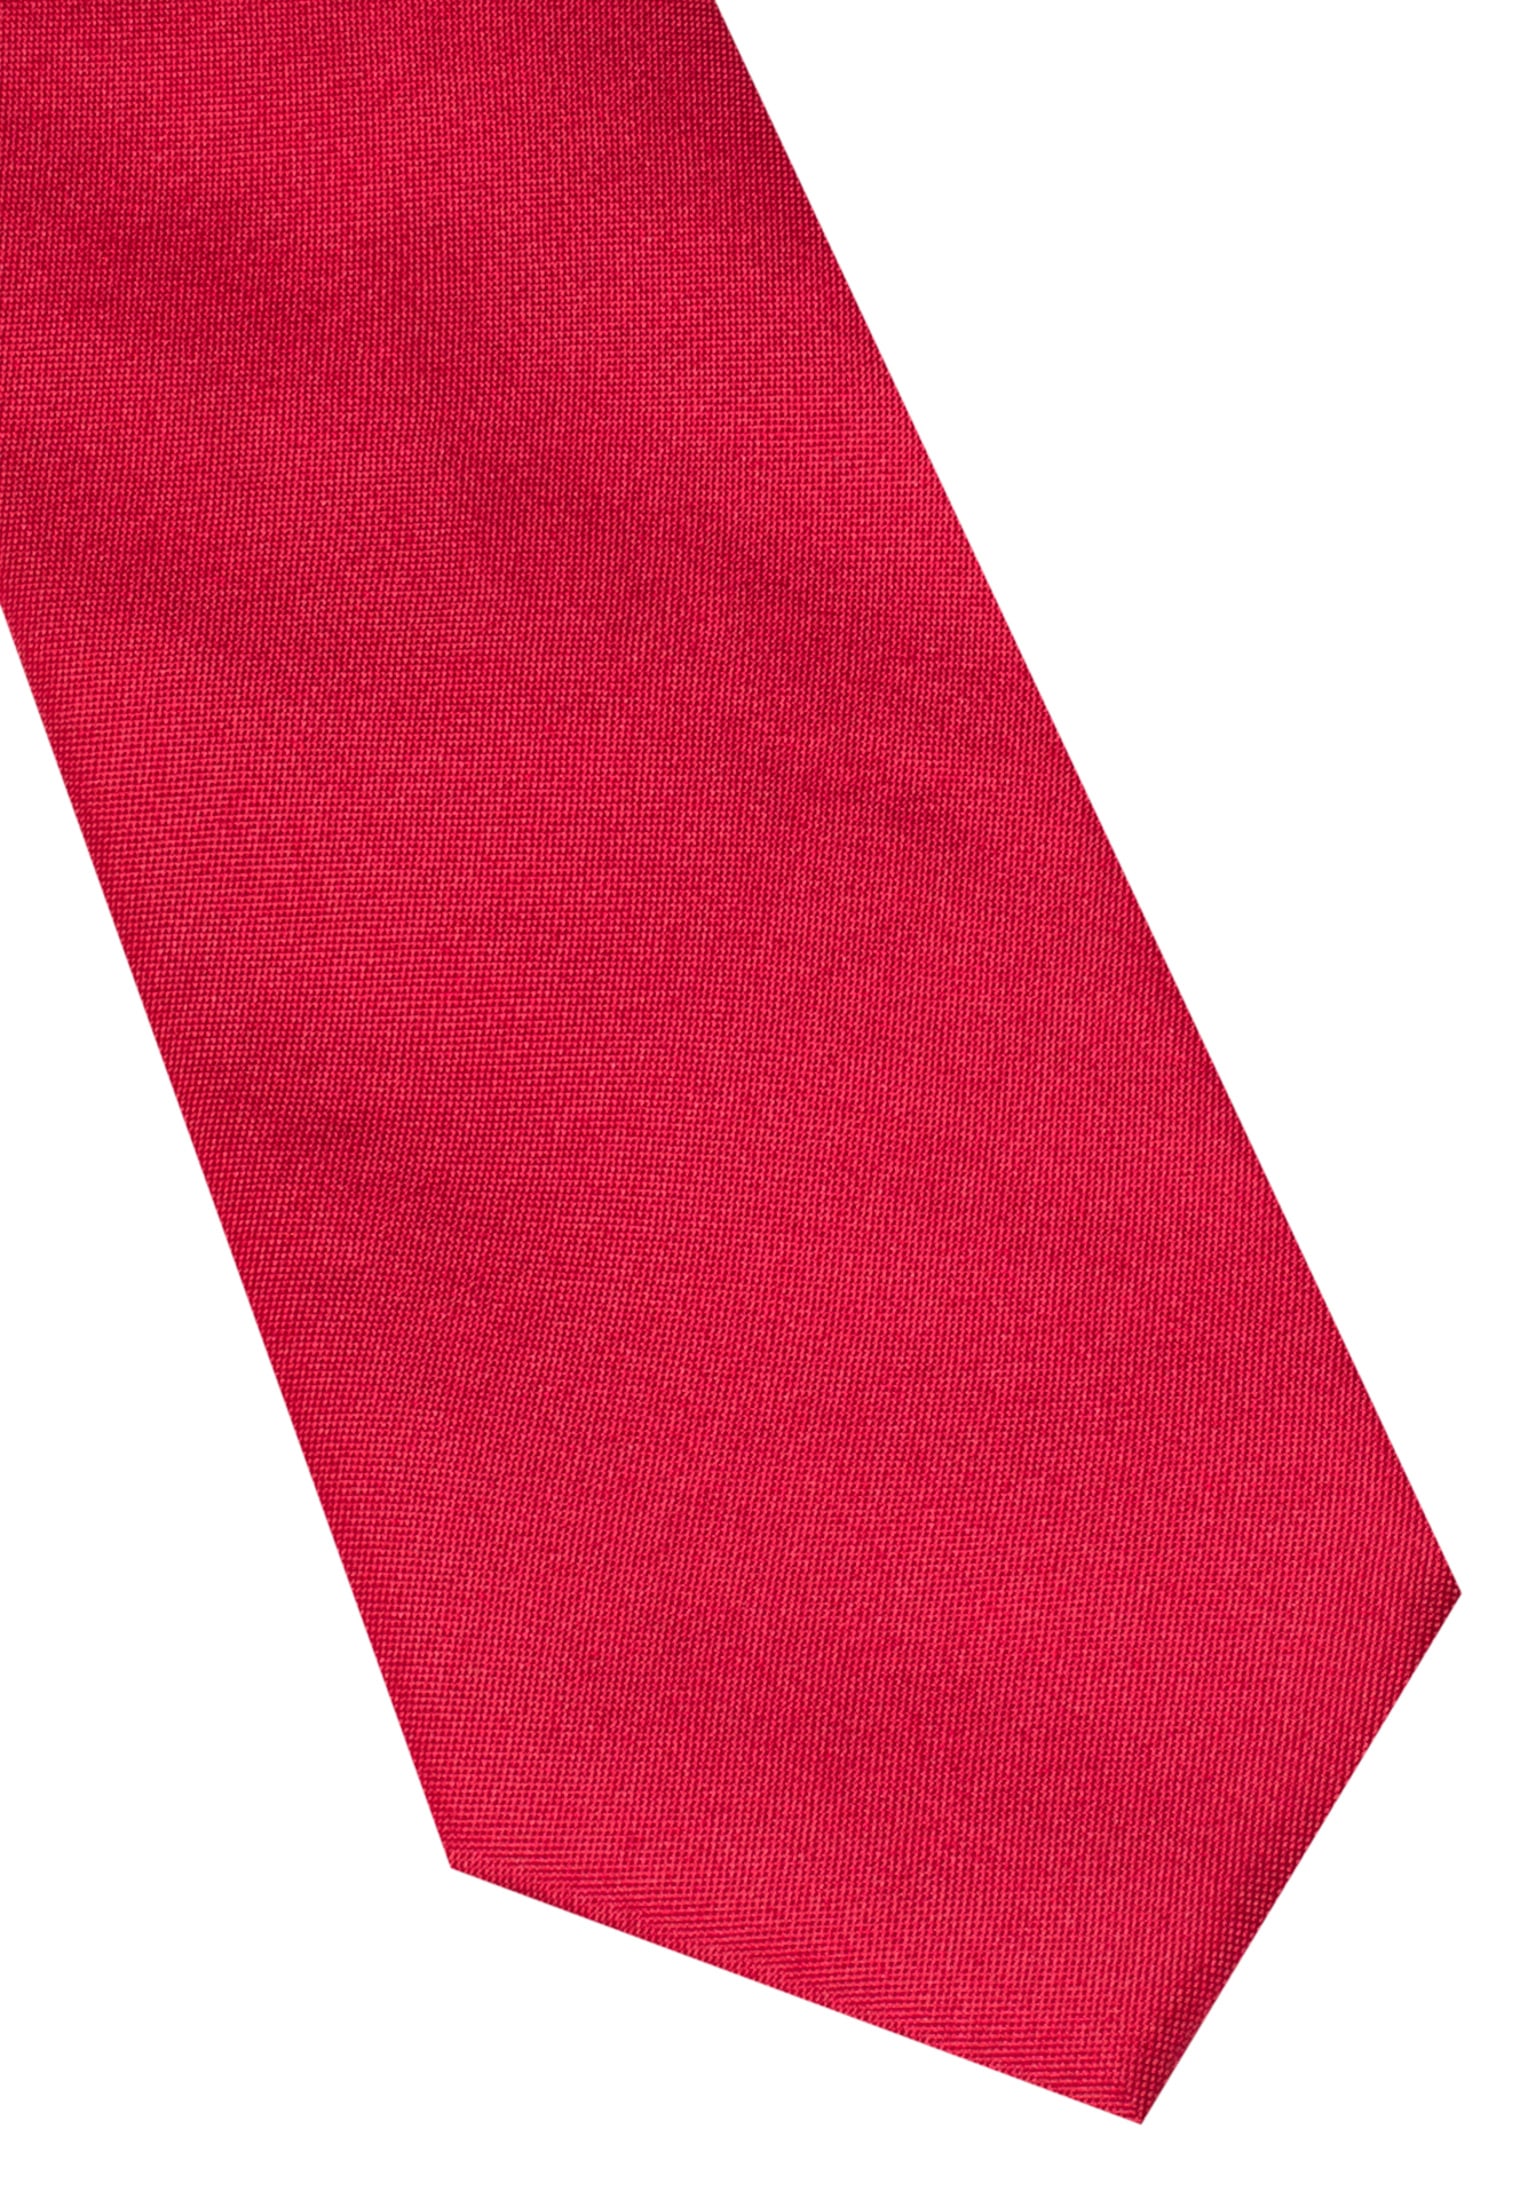 Krawatte in unifarben rot 1AC00025-05-01-142 rot | | 142 